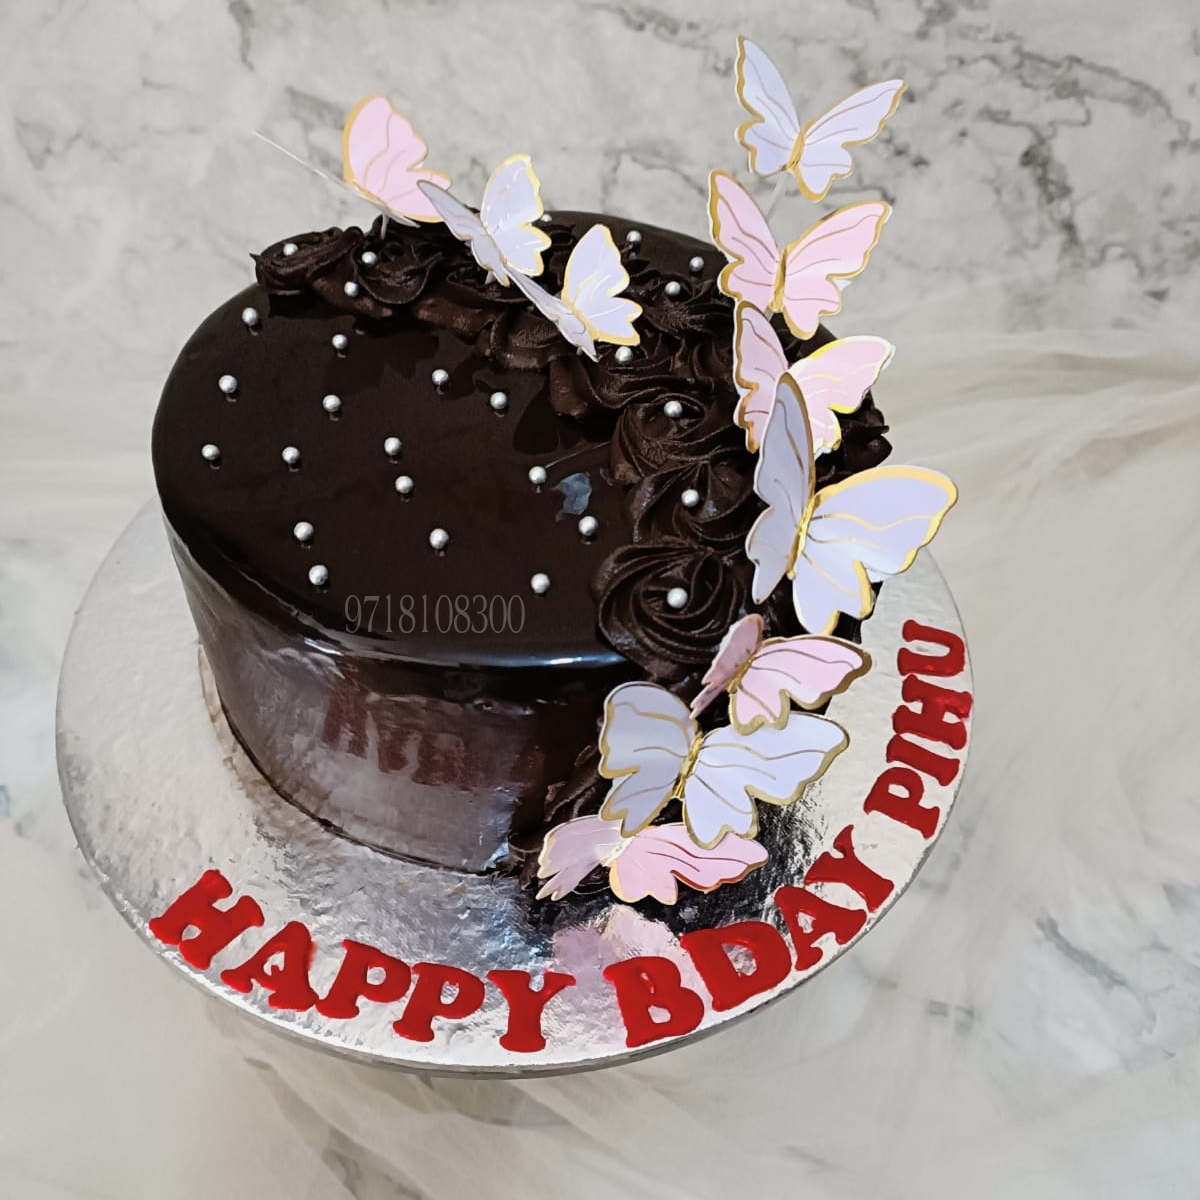 Chocolate Butterfly Cake | Yummy cake